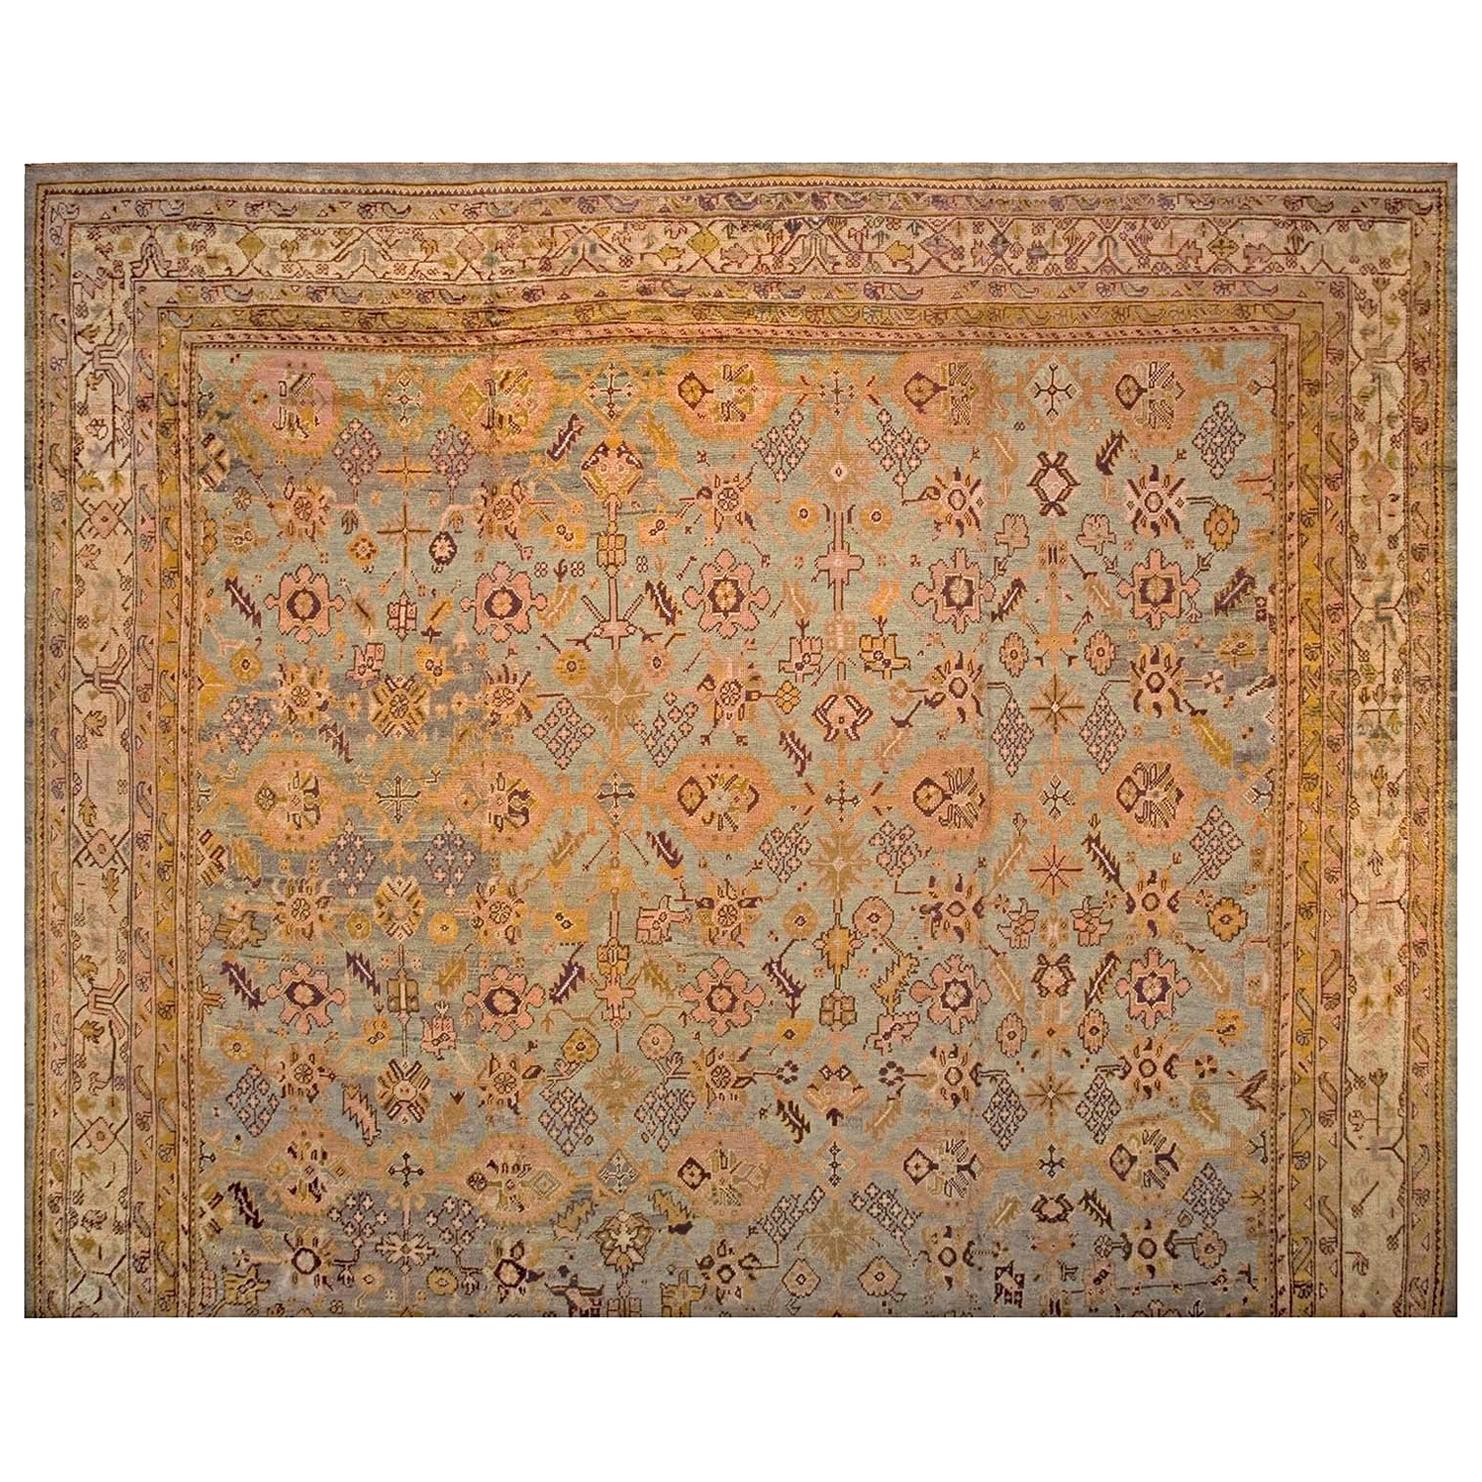 Late 19th Century Turkish Oushak Carpet ( 17'6" x 19'6" - 533 x 594 )